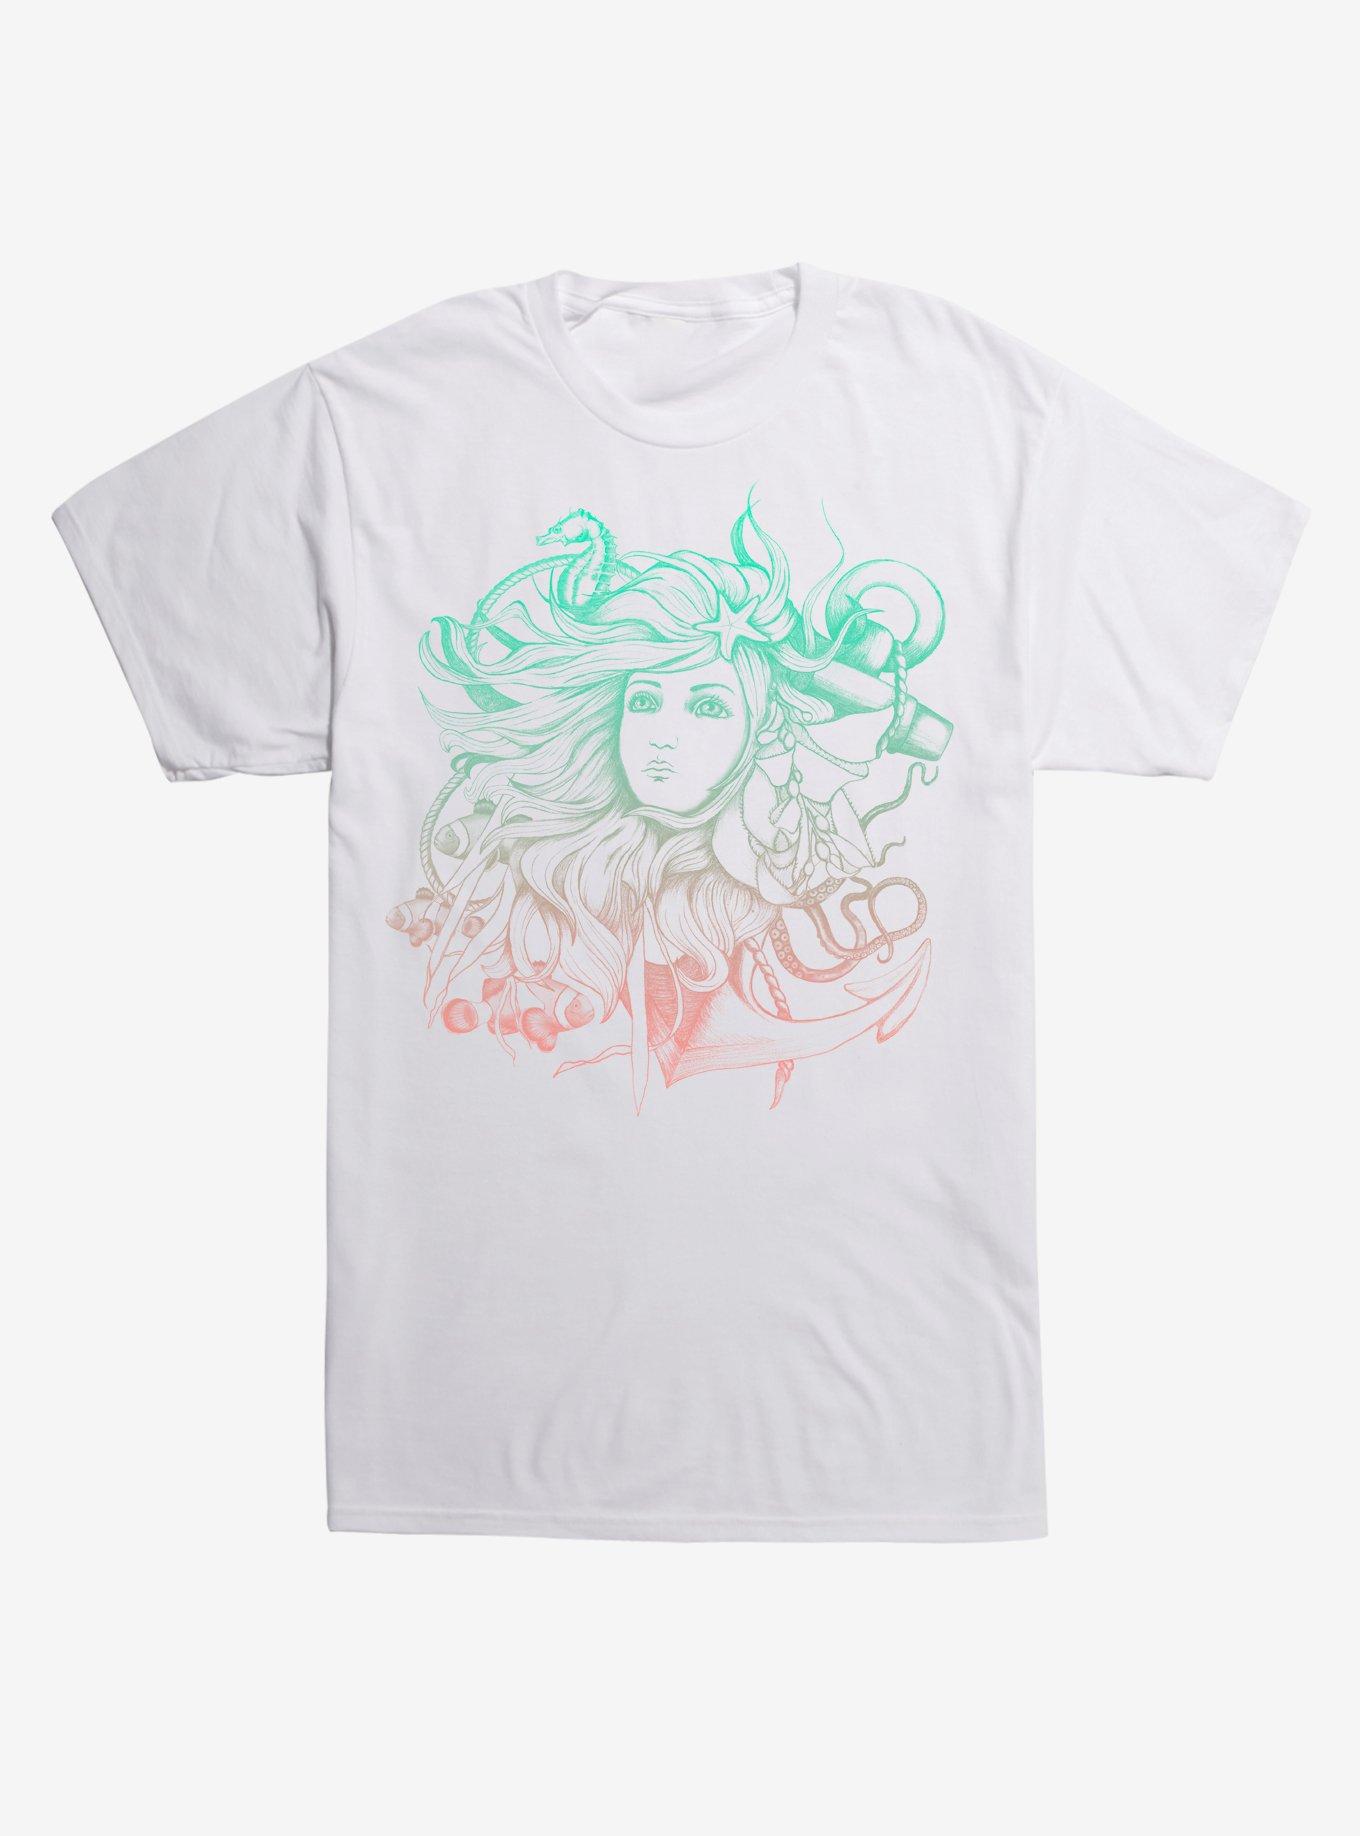 Mermaid Sketch T-Shirt